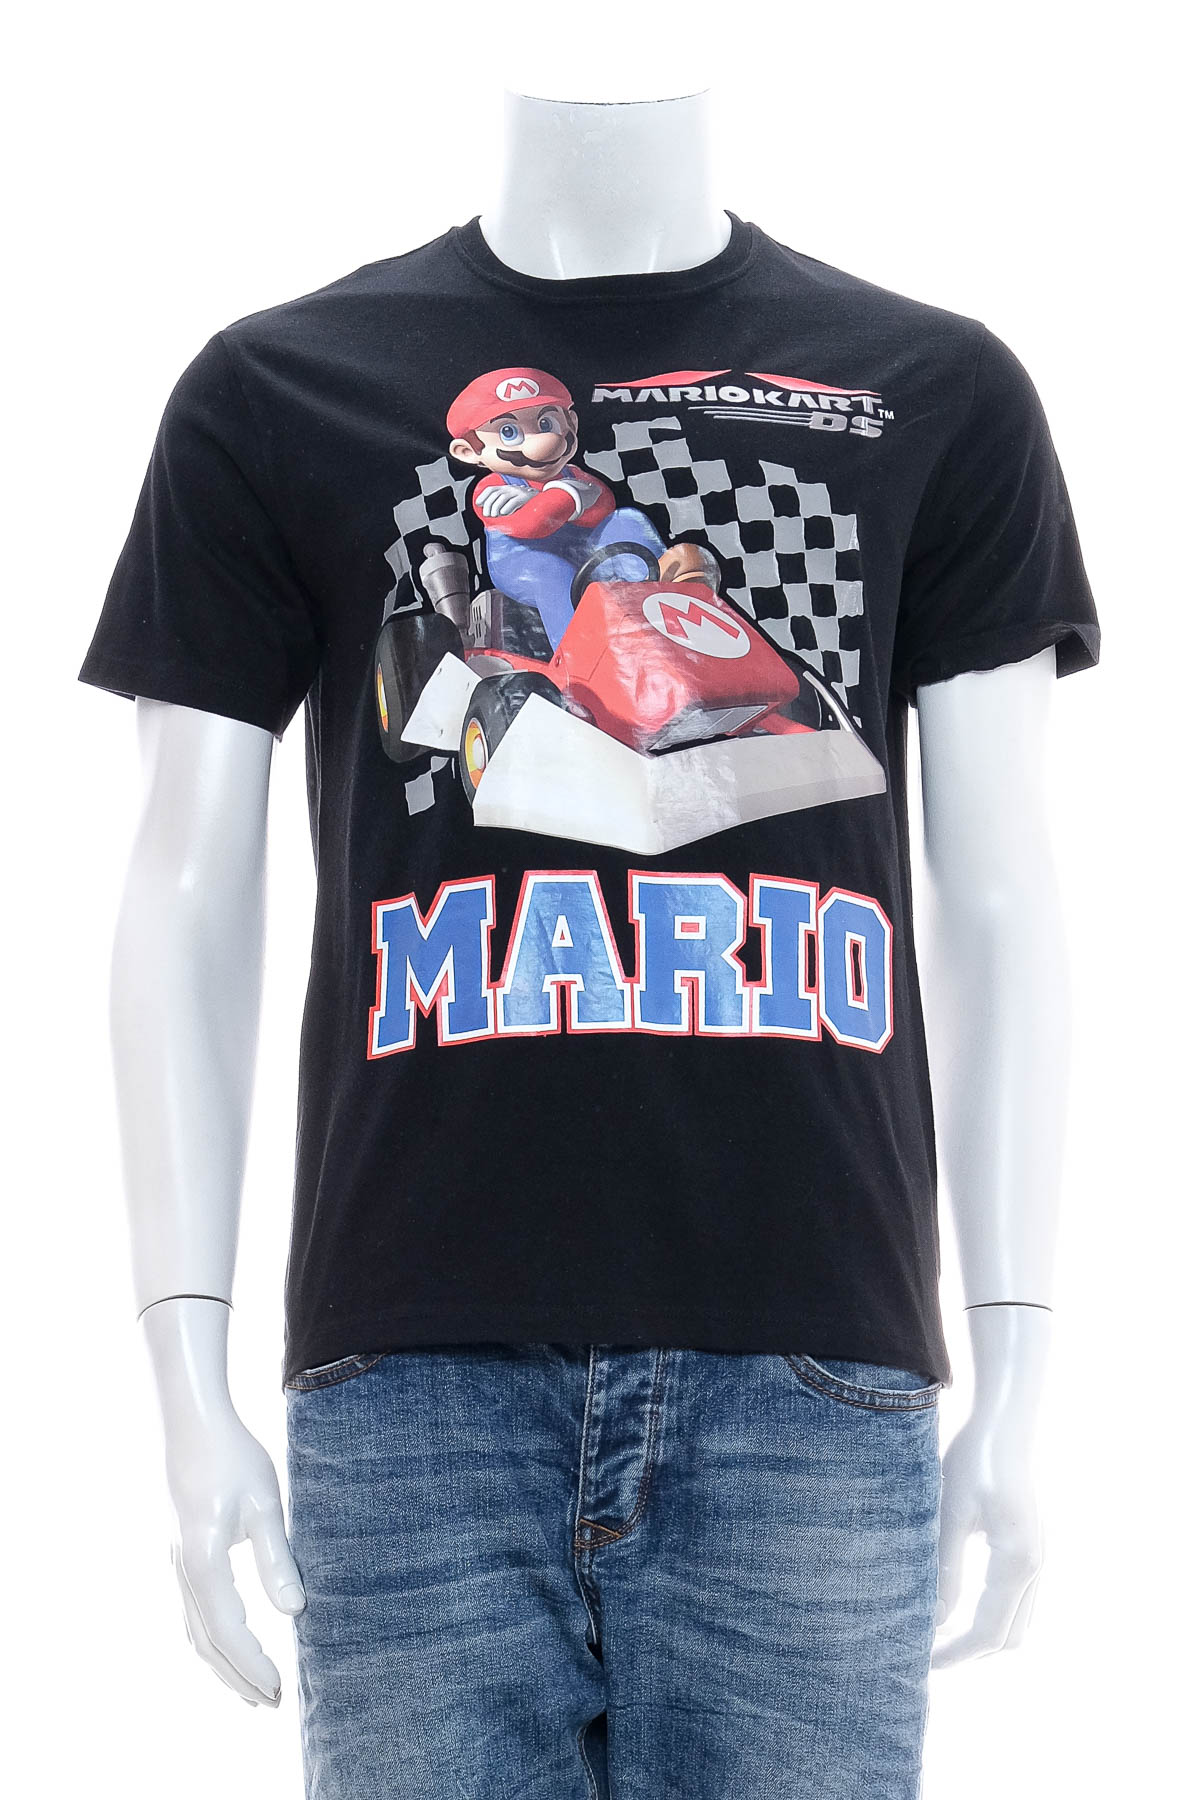 Boy's t-shirt - Nintendo - 0